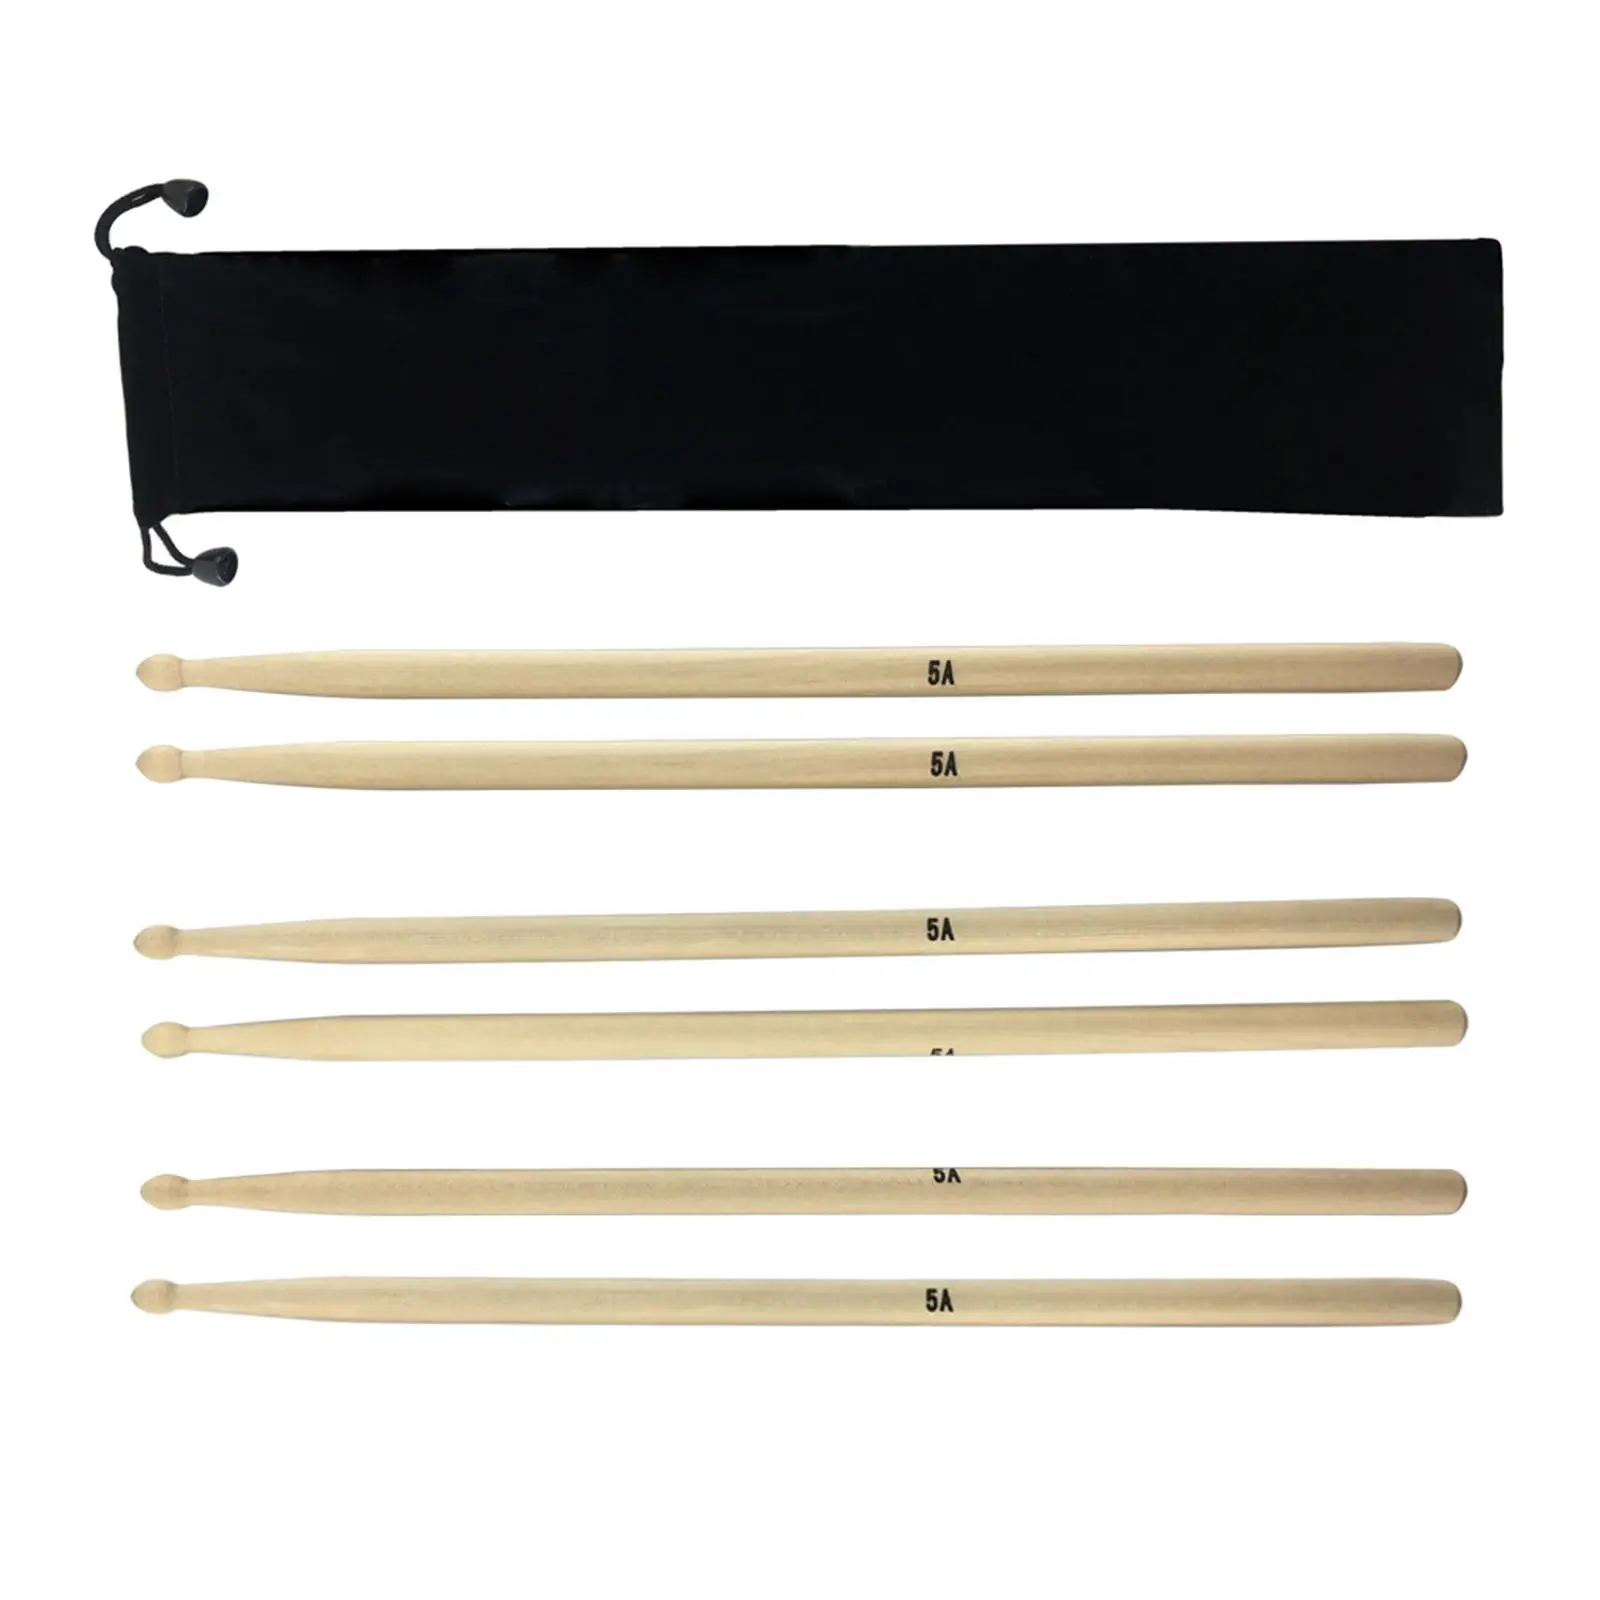 6x Percussion Mallets Sticks 16 inch Long Glockenspiel Sticks for Kids Drummers